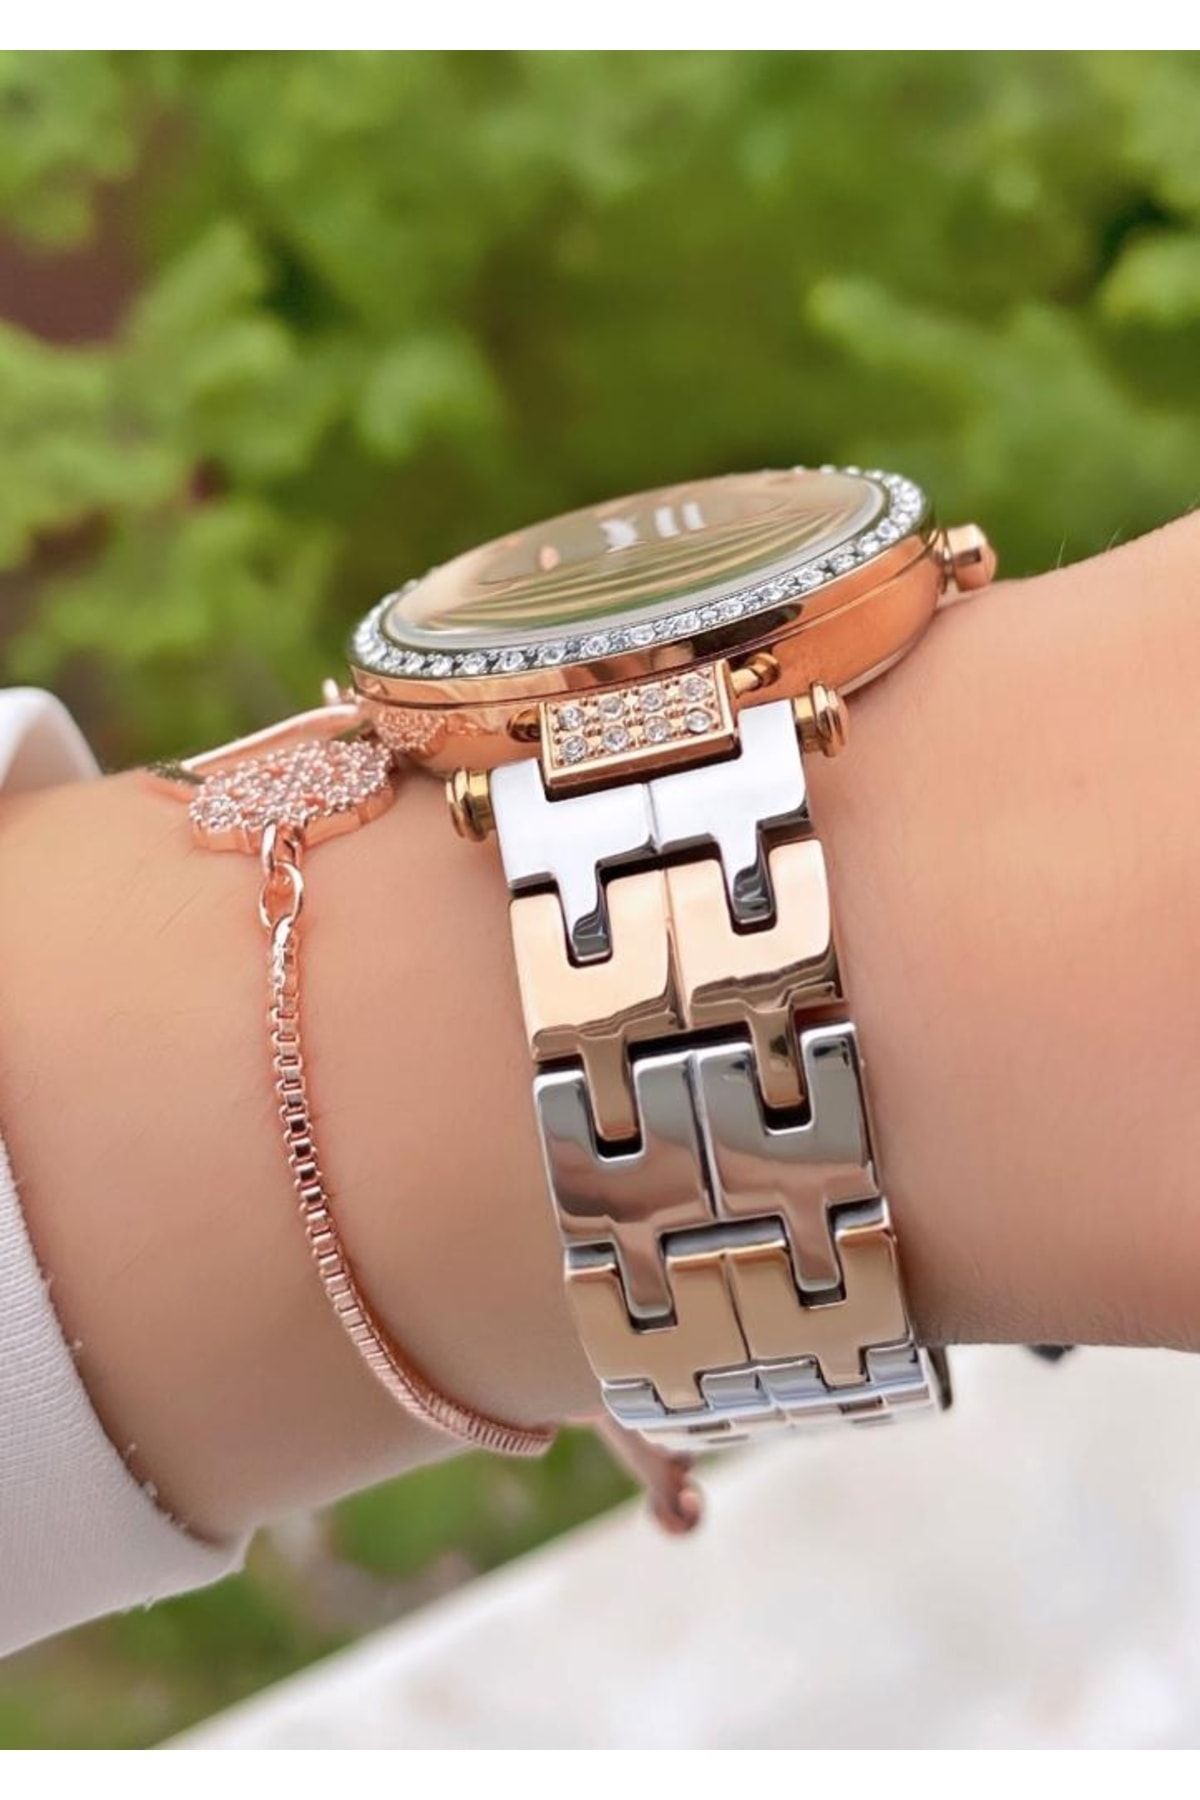 RORIOS Watches Women Analog Quartz Watch with Leather Strap Square Dial  Dress Wrist Watch for Women Ladies Girls : Amazon.co.uk: Fashion